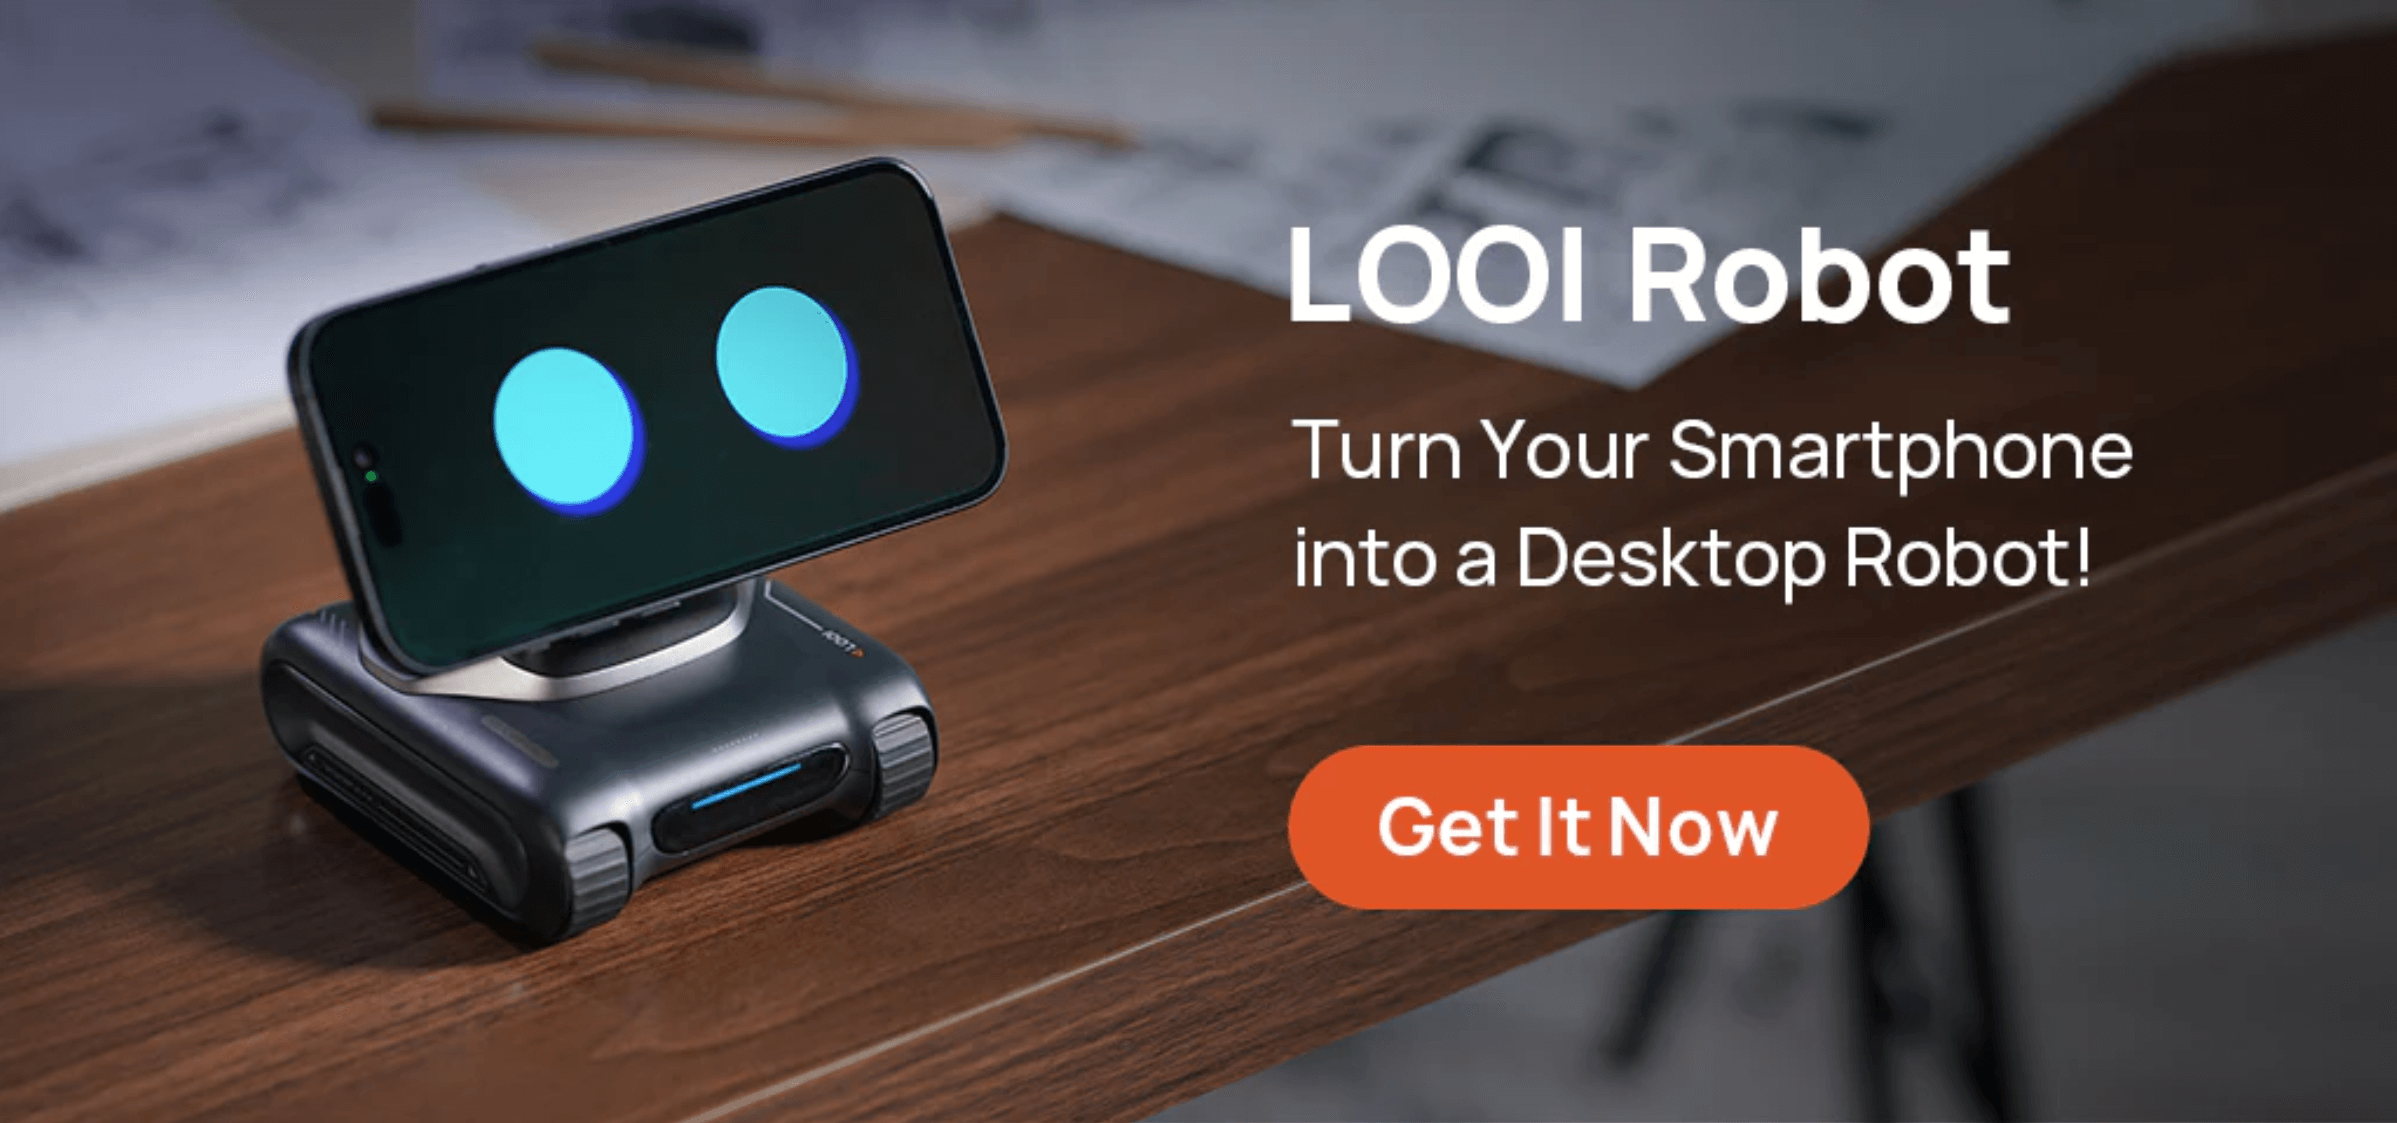 LOOI Robot-Turn Your Smartphone into a Desktop Robot